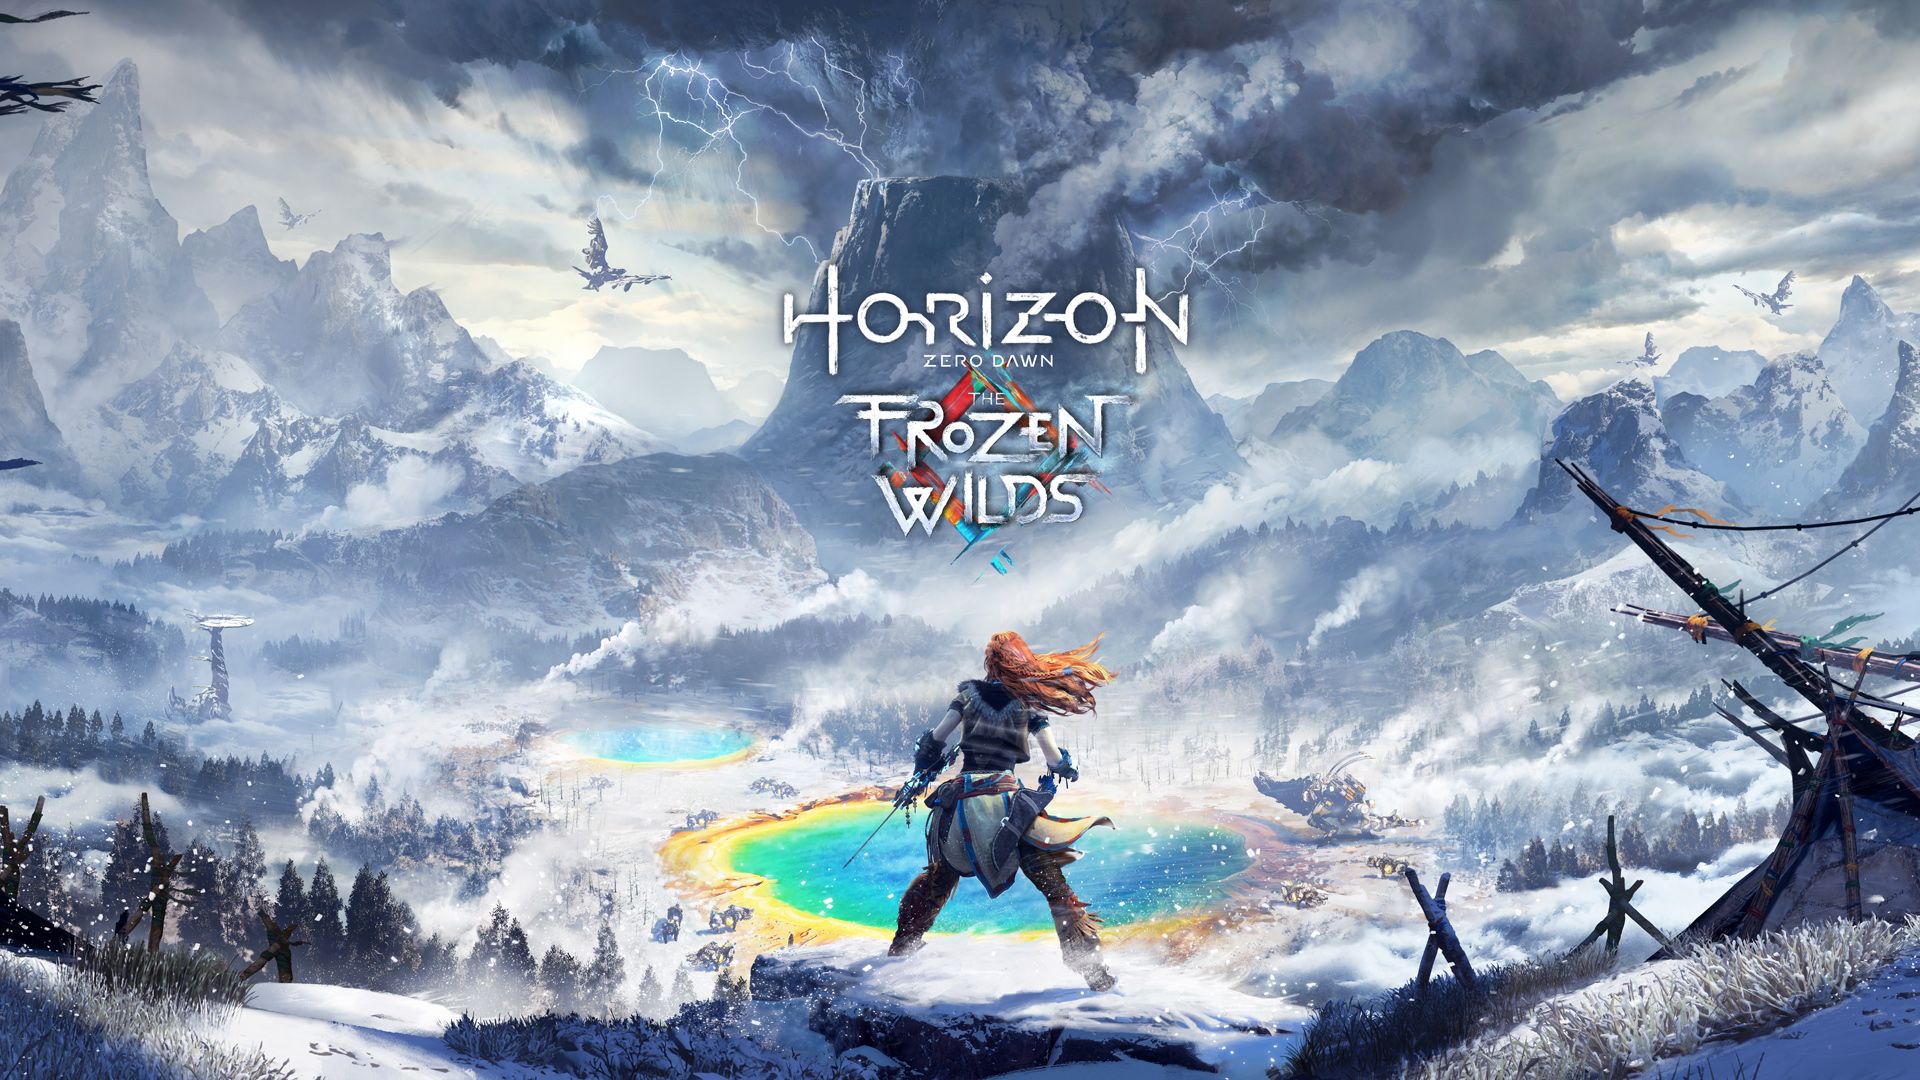 Cover image for Horizon Zero Dawn Frozen Wilds